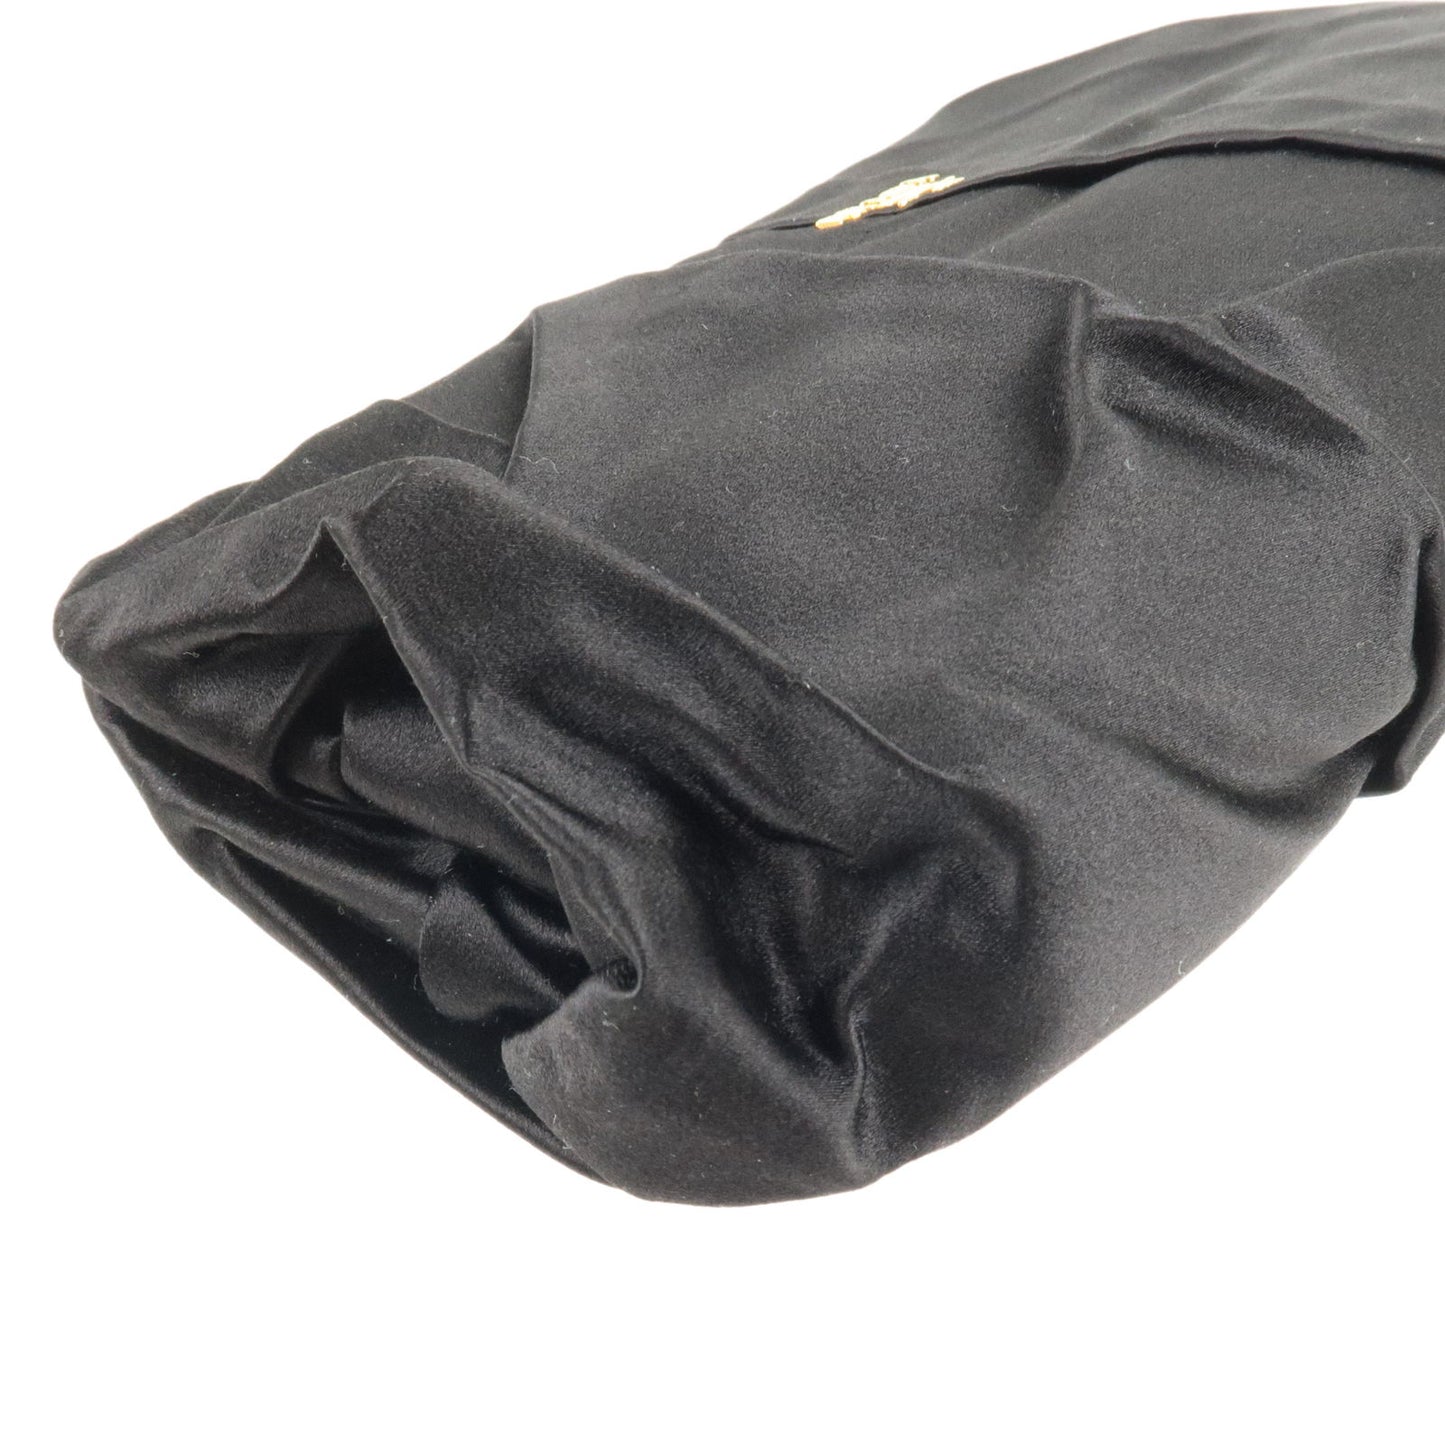 PRADA Logo Satin Clutch Bag NERO Black Gold Hardware BP0051